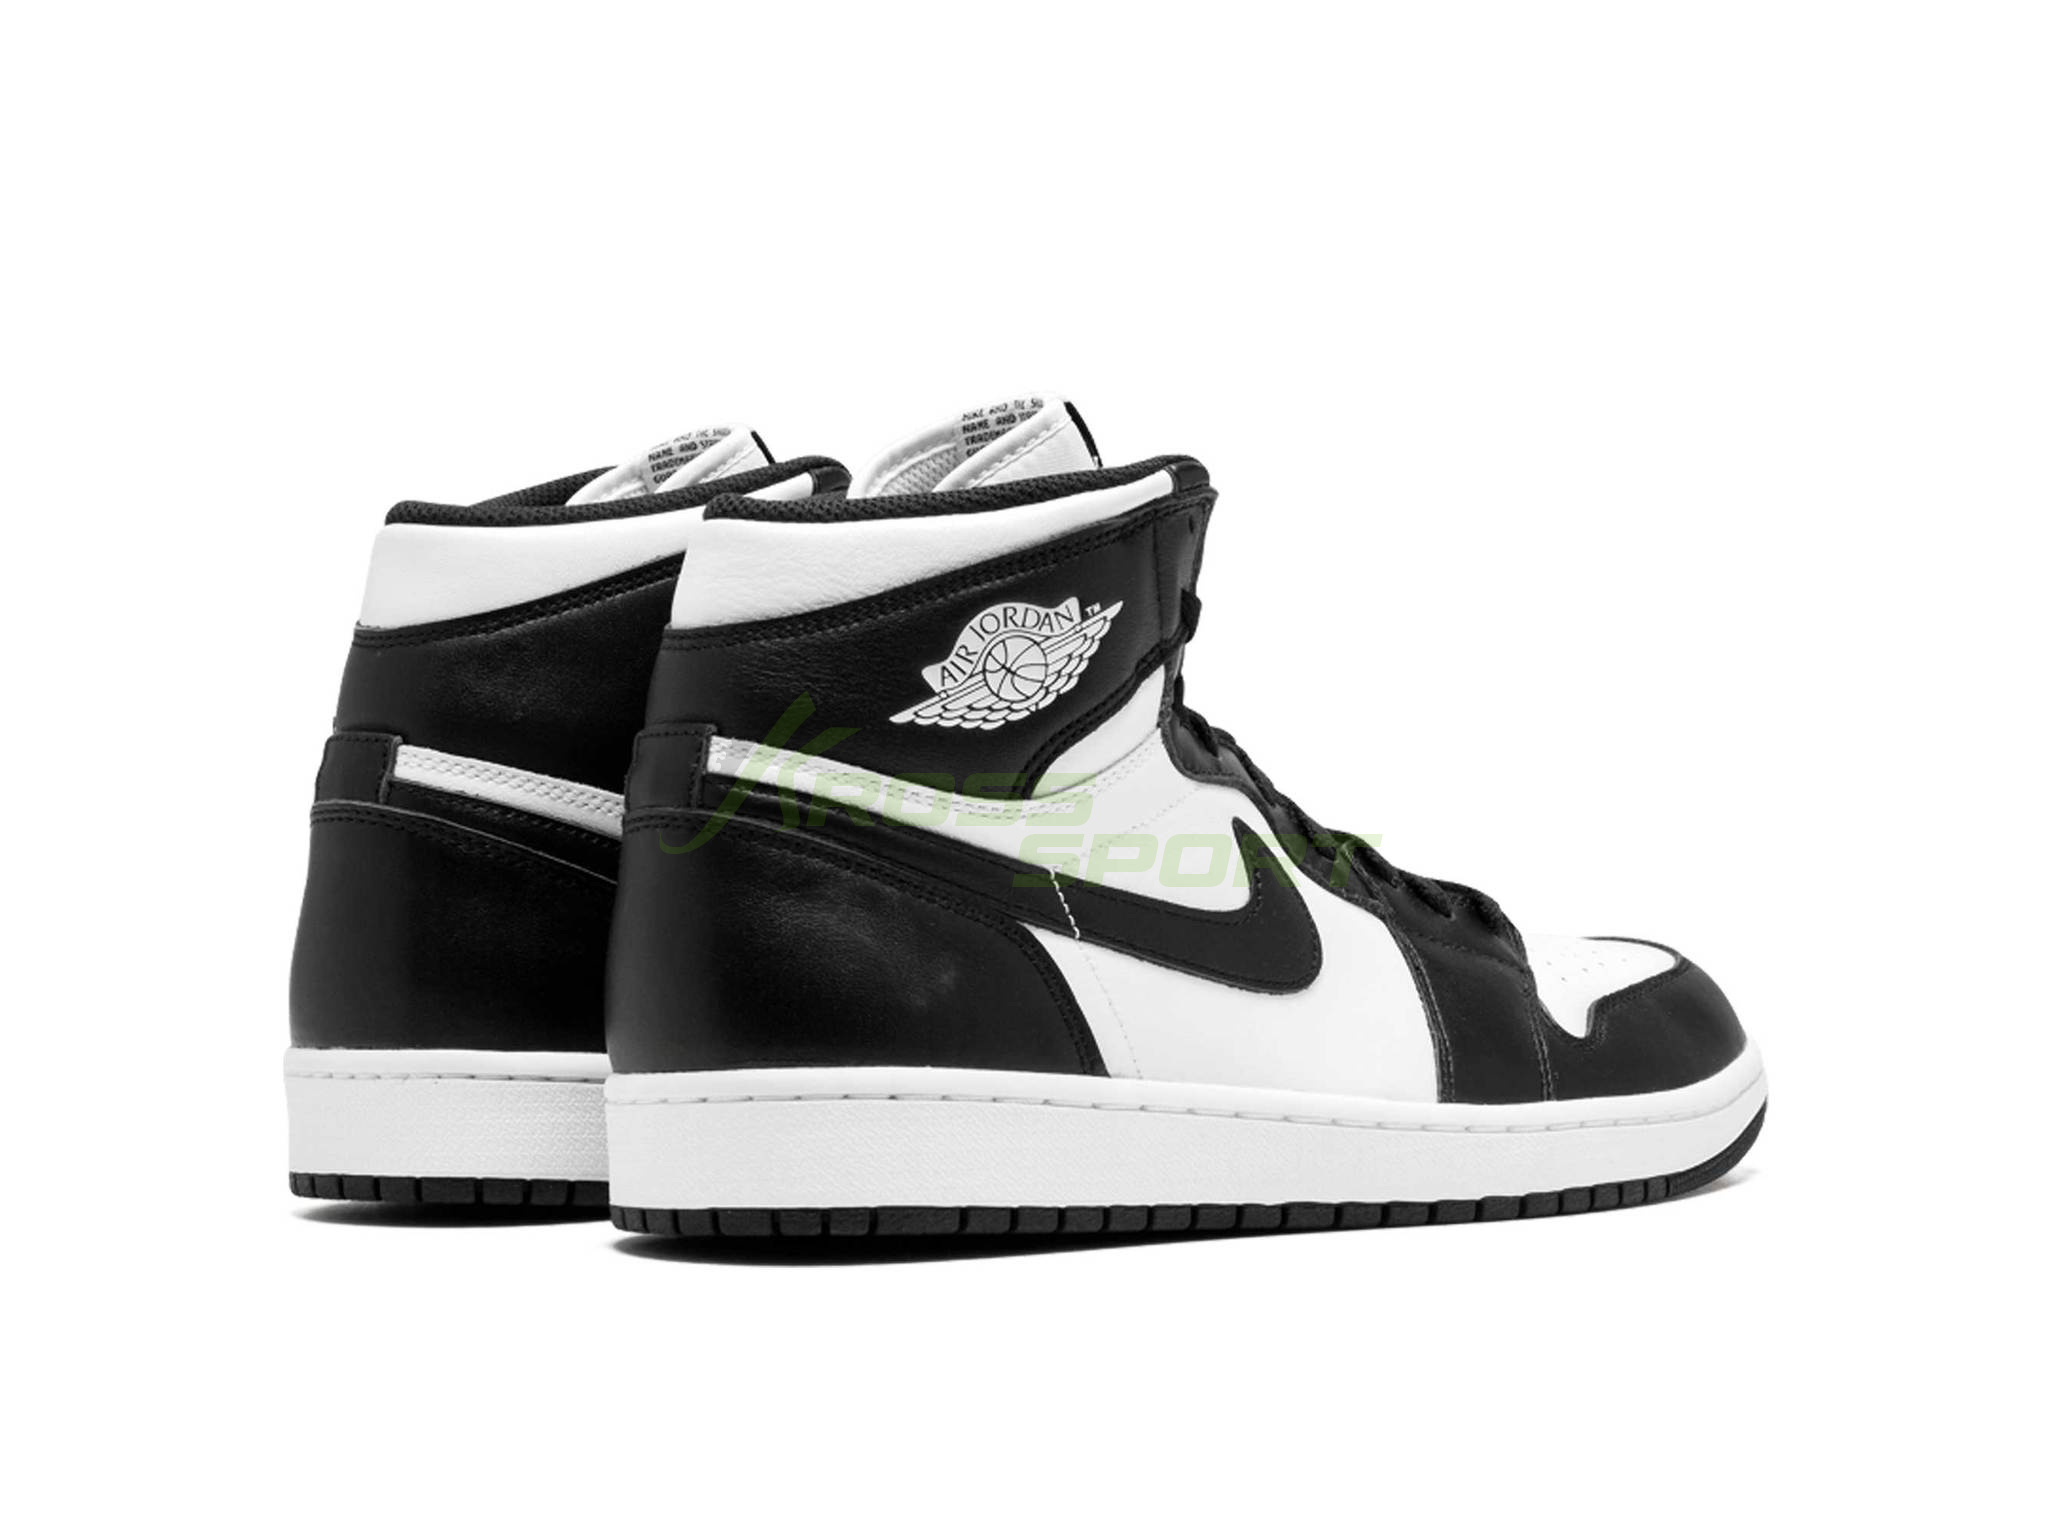  Nike Air Jordan 1 Retro Hi Og Black/White